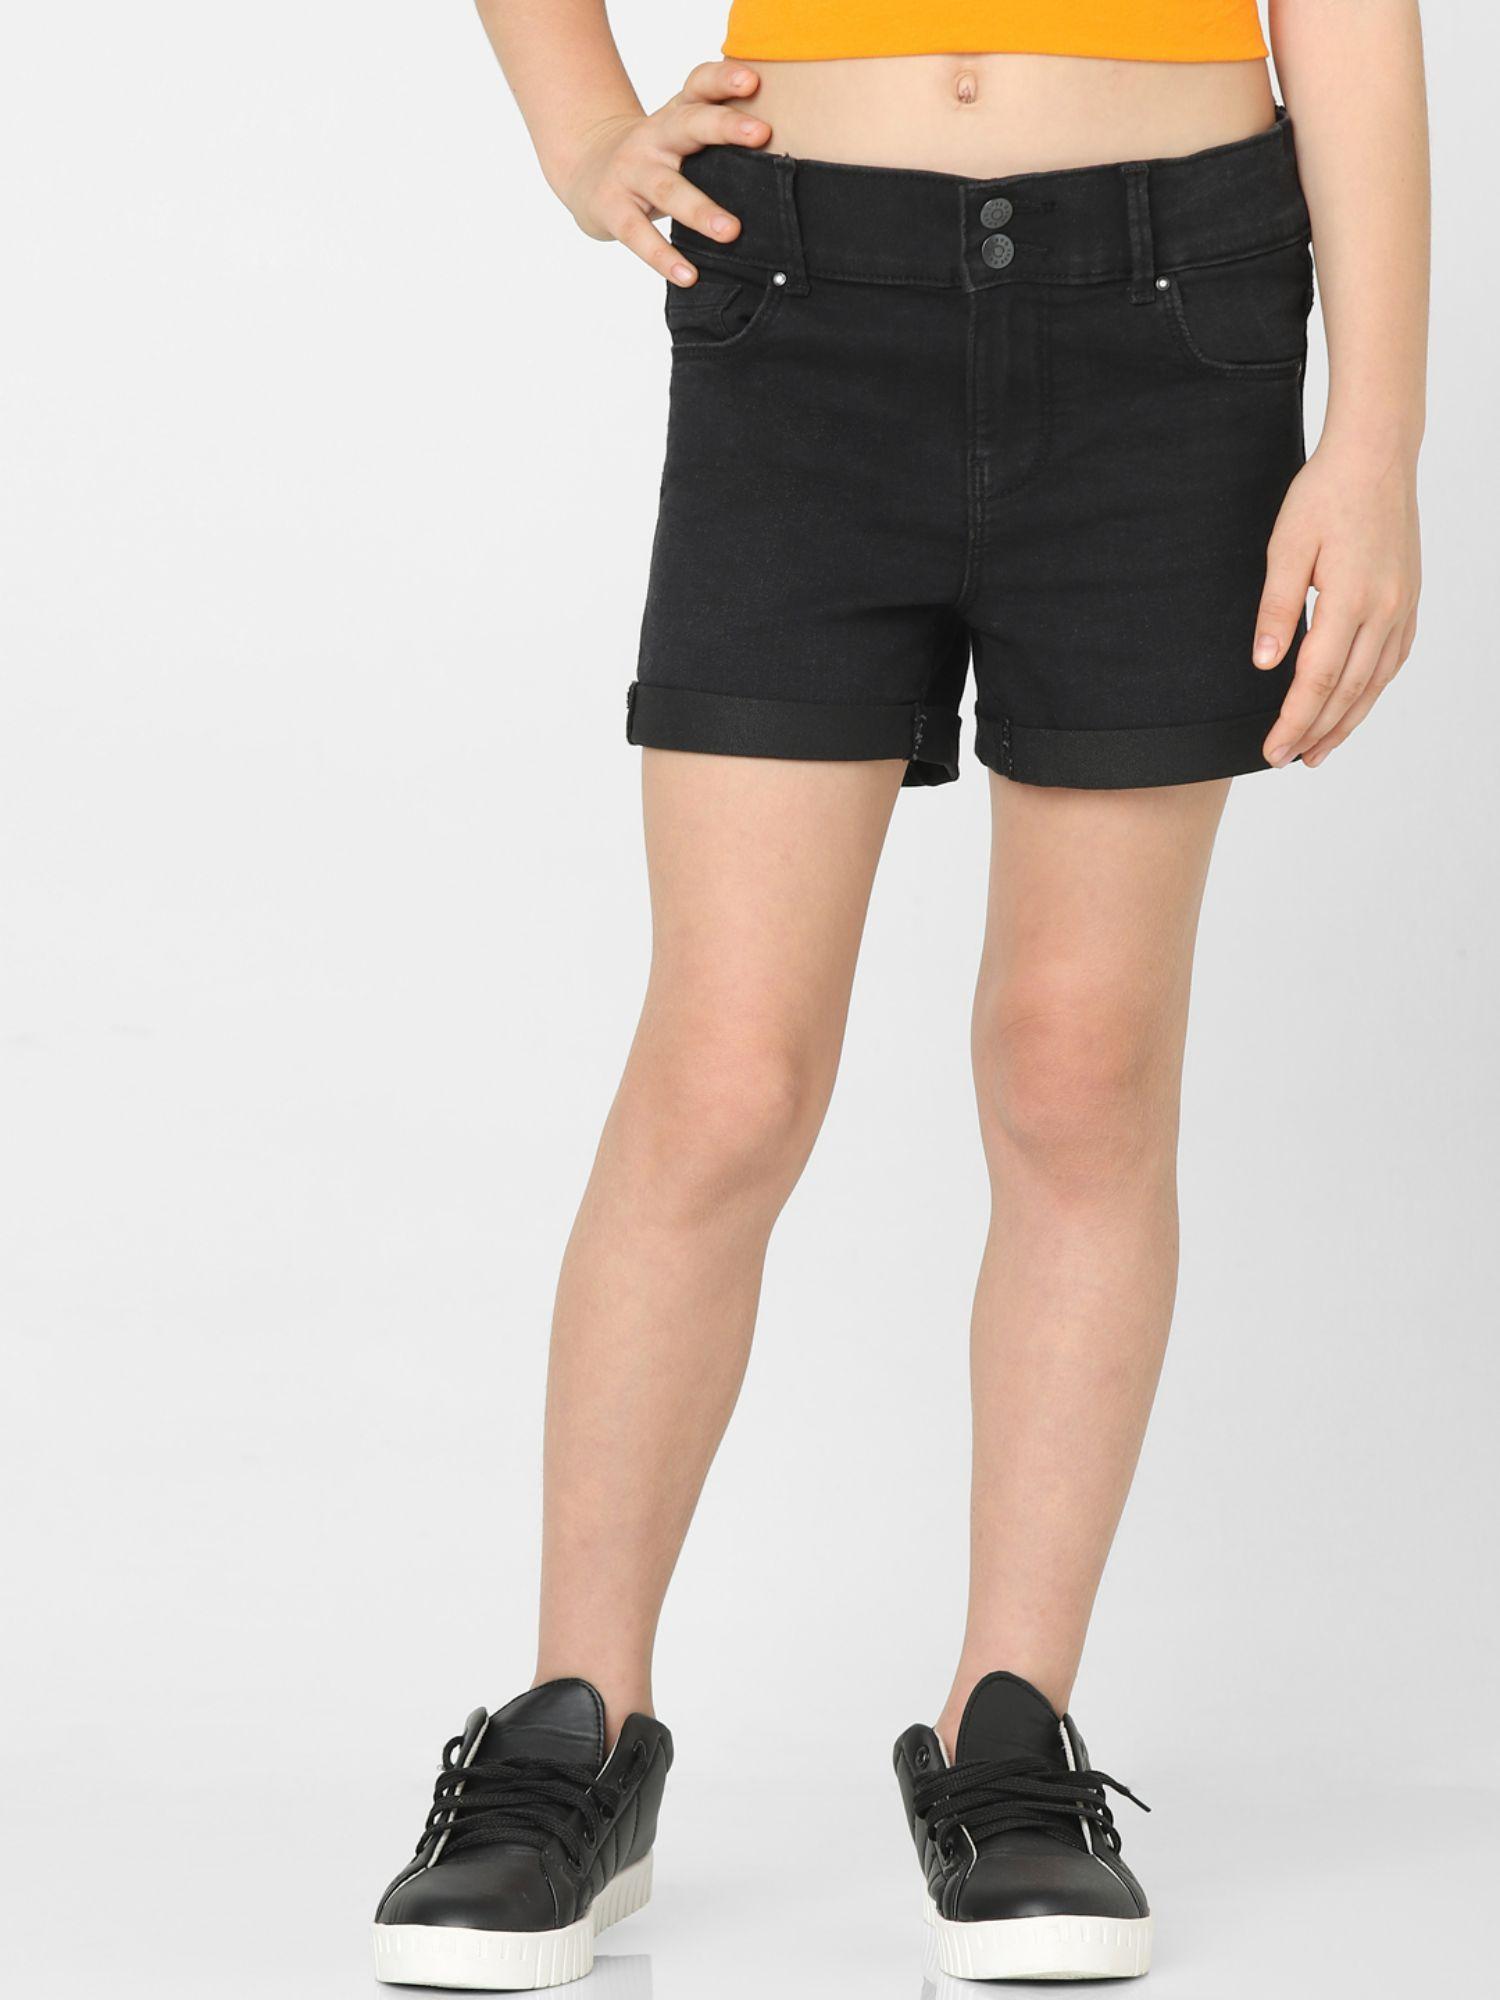 girls-solid-black-shorts